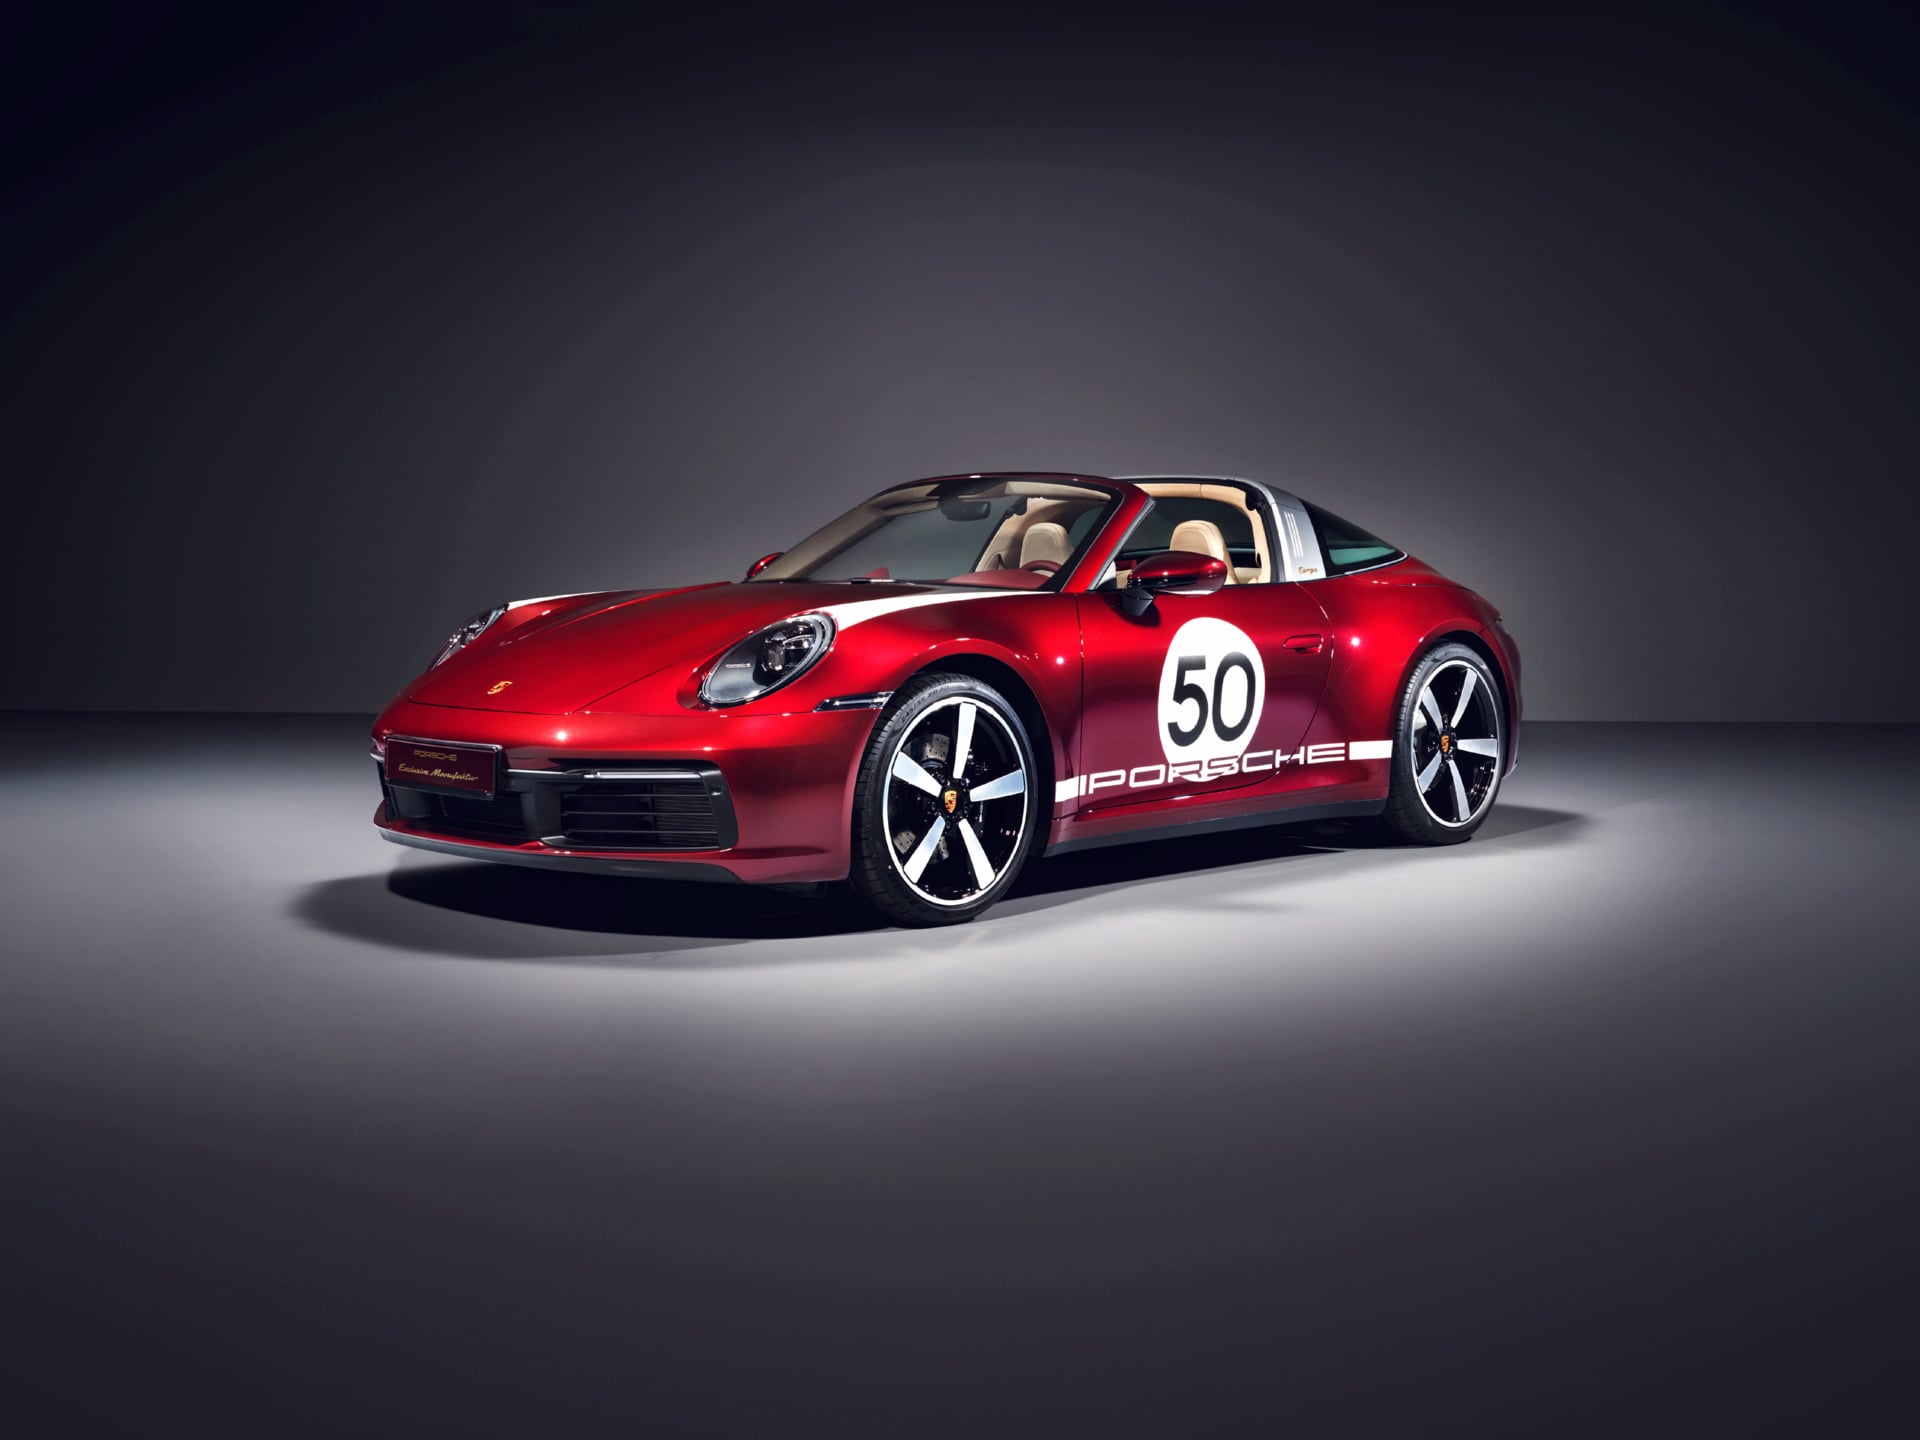 Porsche 911 Targa 4S at 1600 x 1200 size wallpapers HD quality